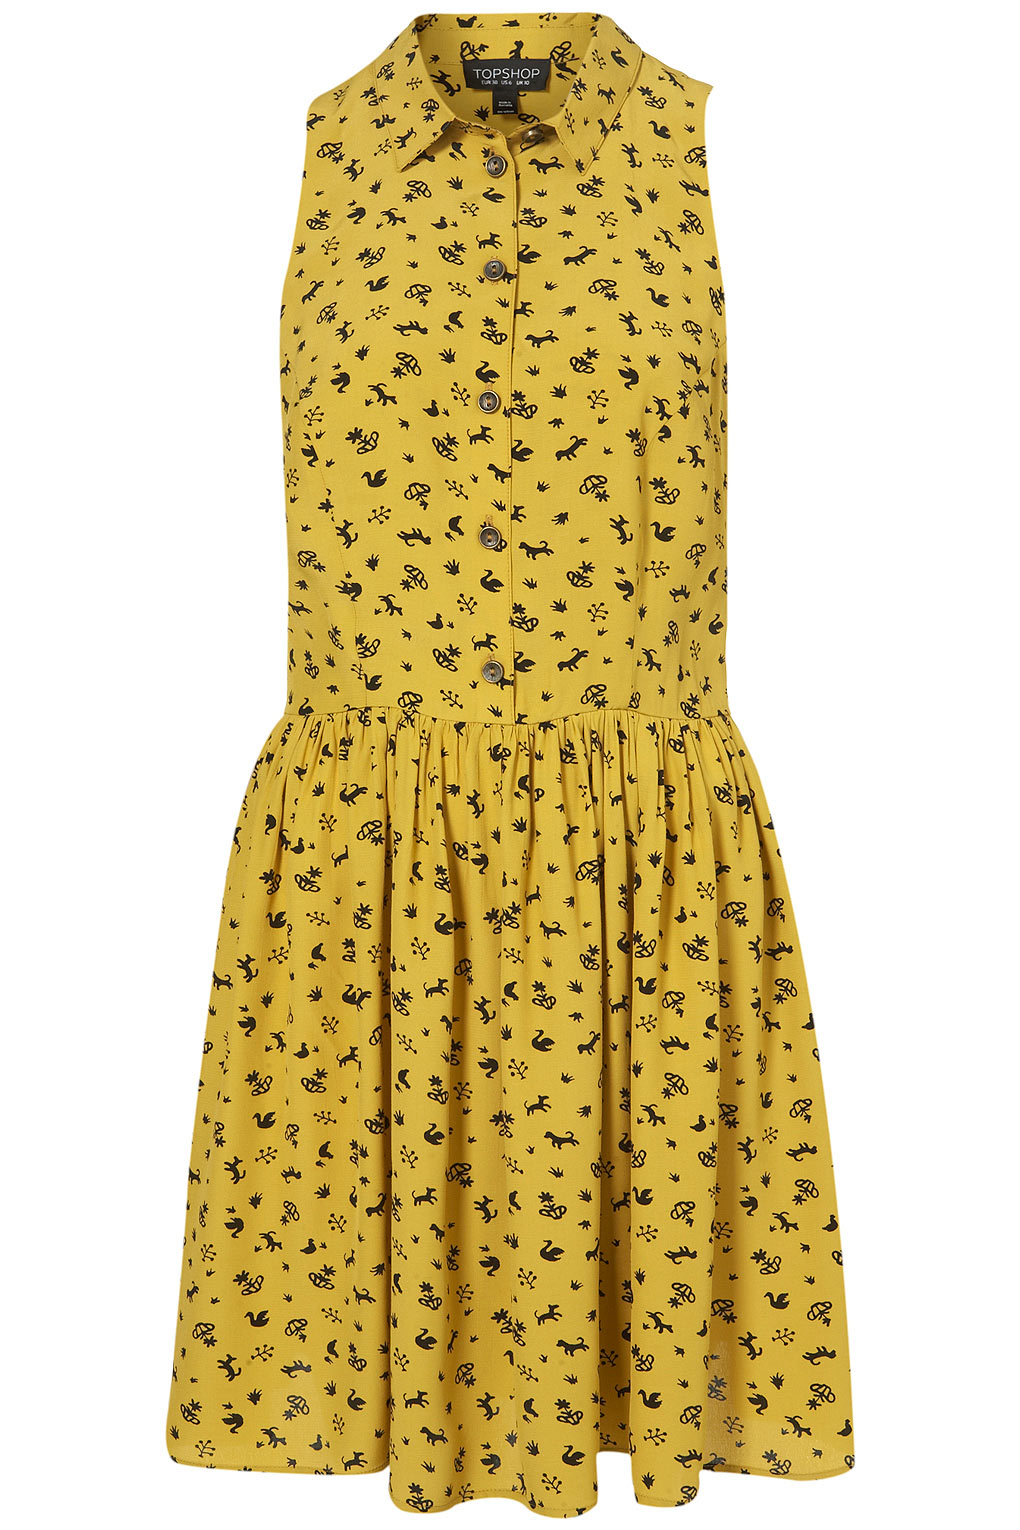 fashion-beauty marmite: selena gomez's yellow dress from top shop!